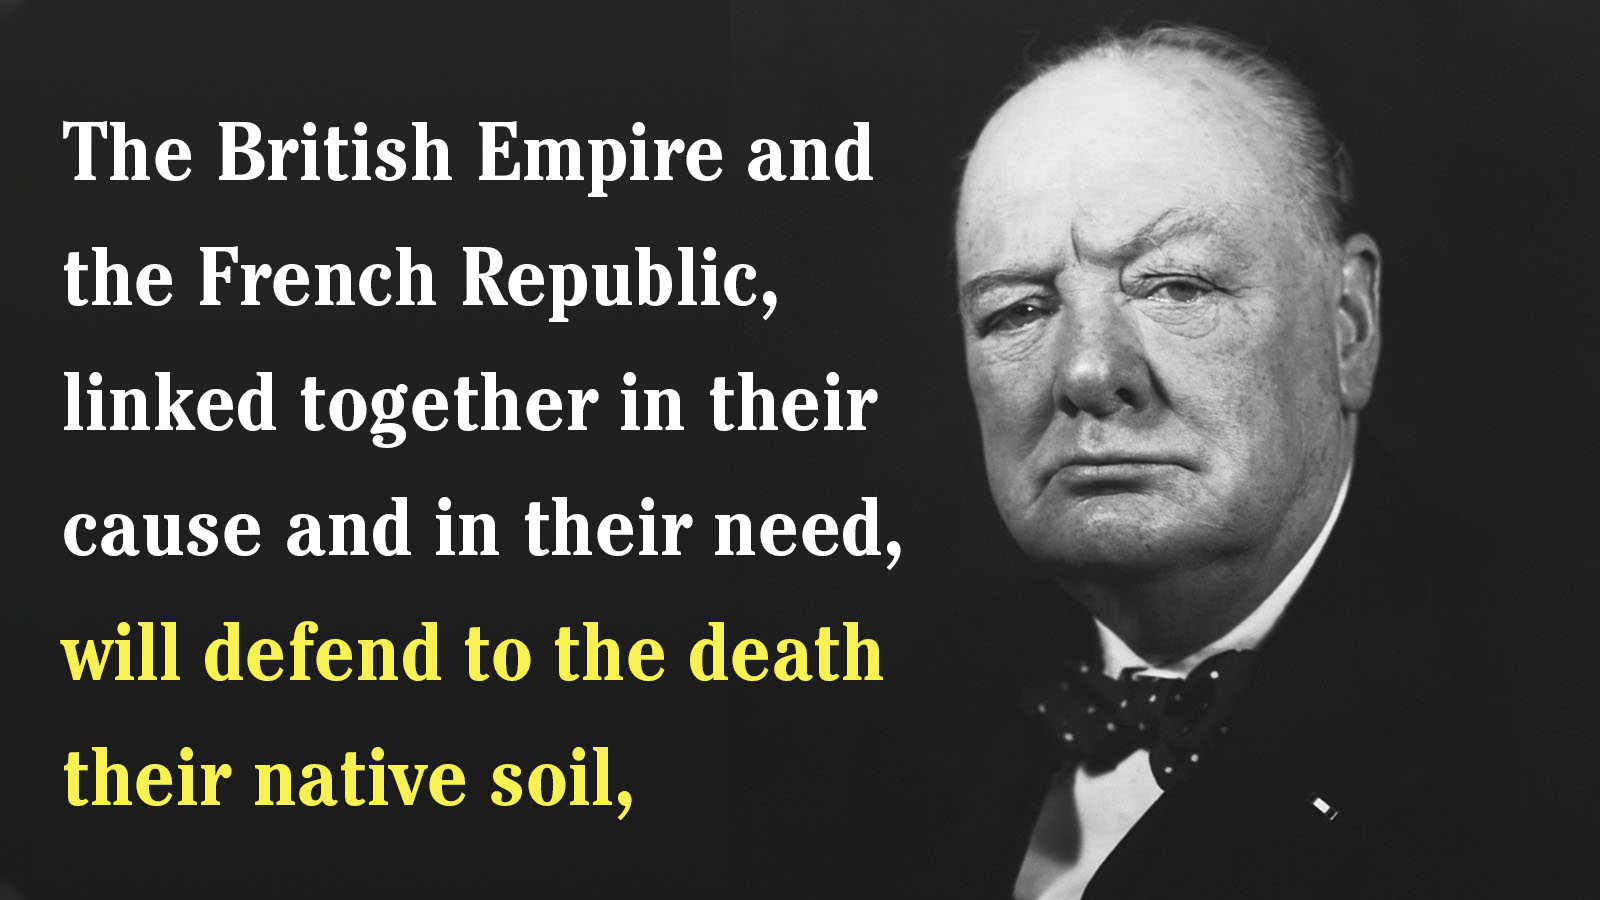 Winston Churchill anastrophe example